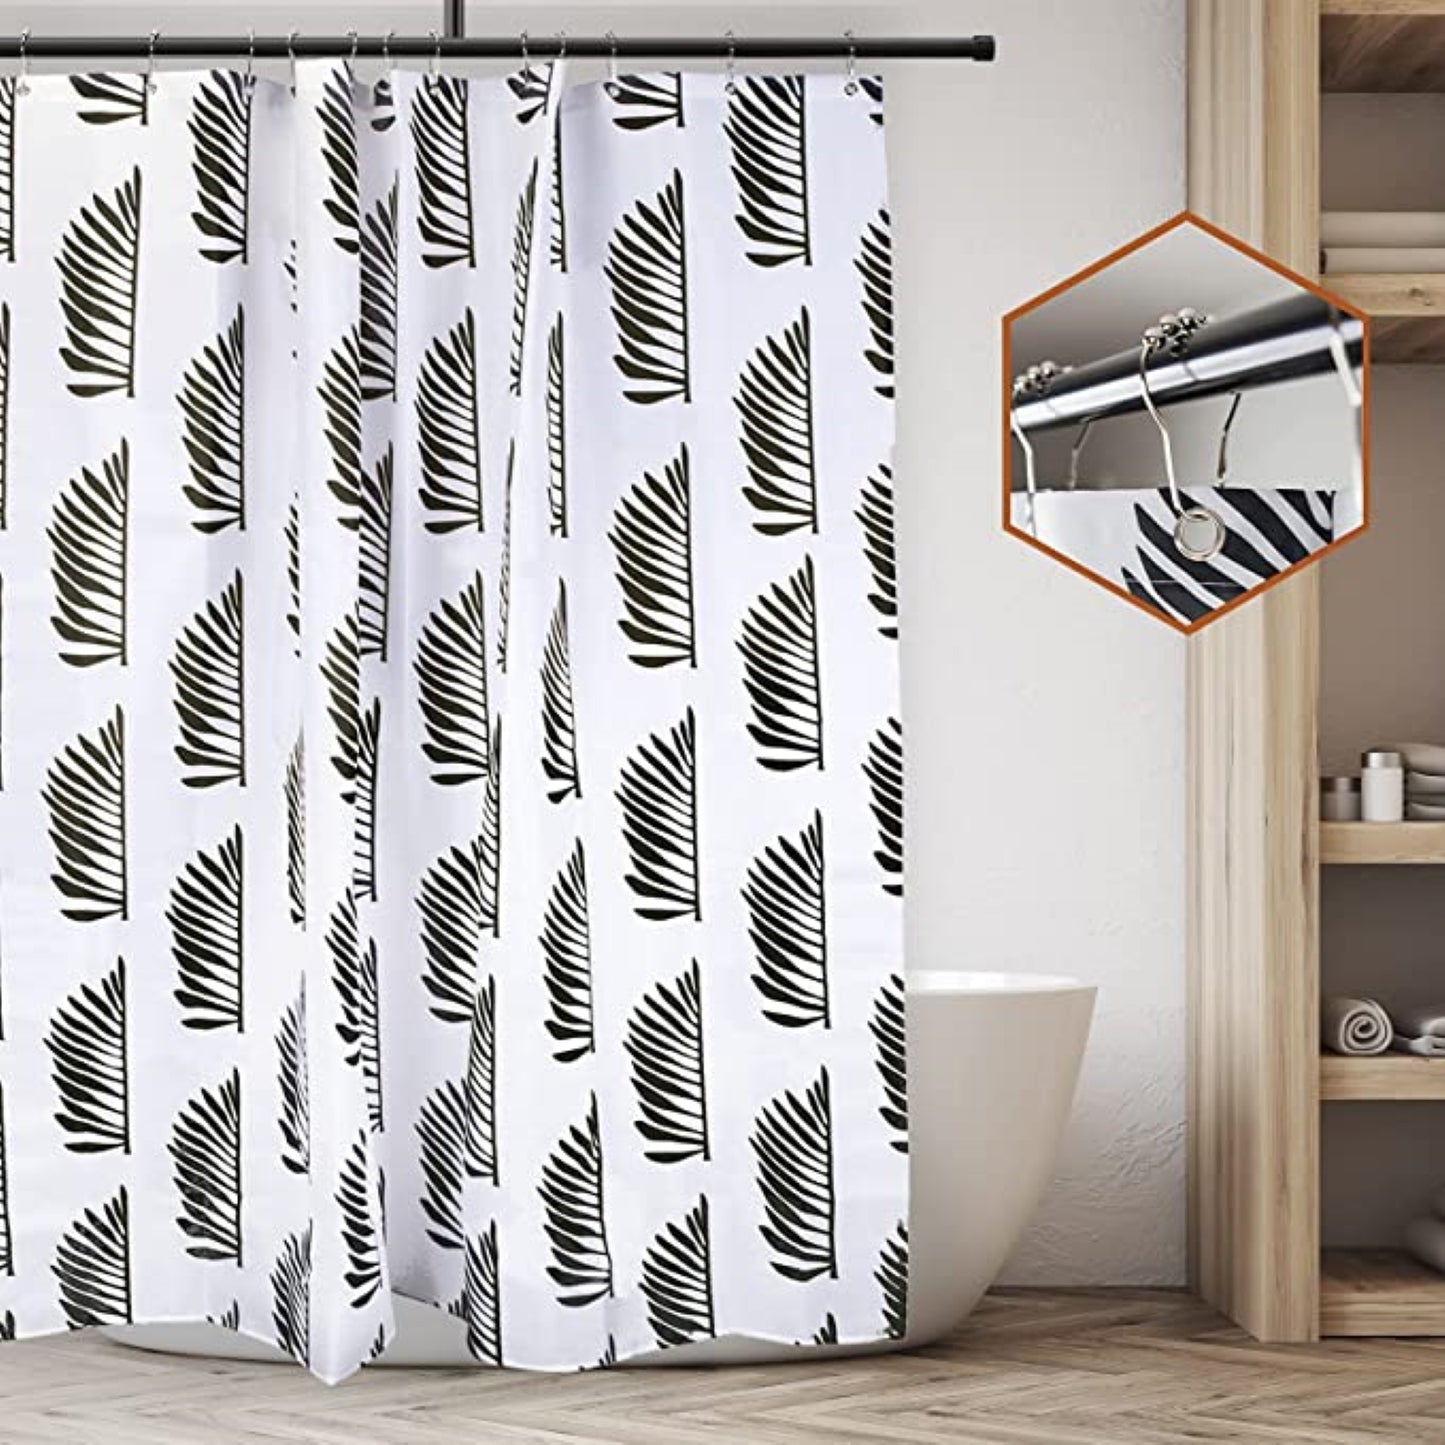 Shower Curtain Set With 12 Metal Hooks For Bathroom Boho Style Palm Varato Design